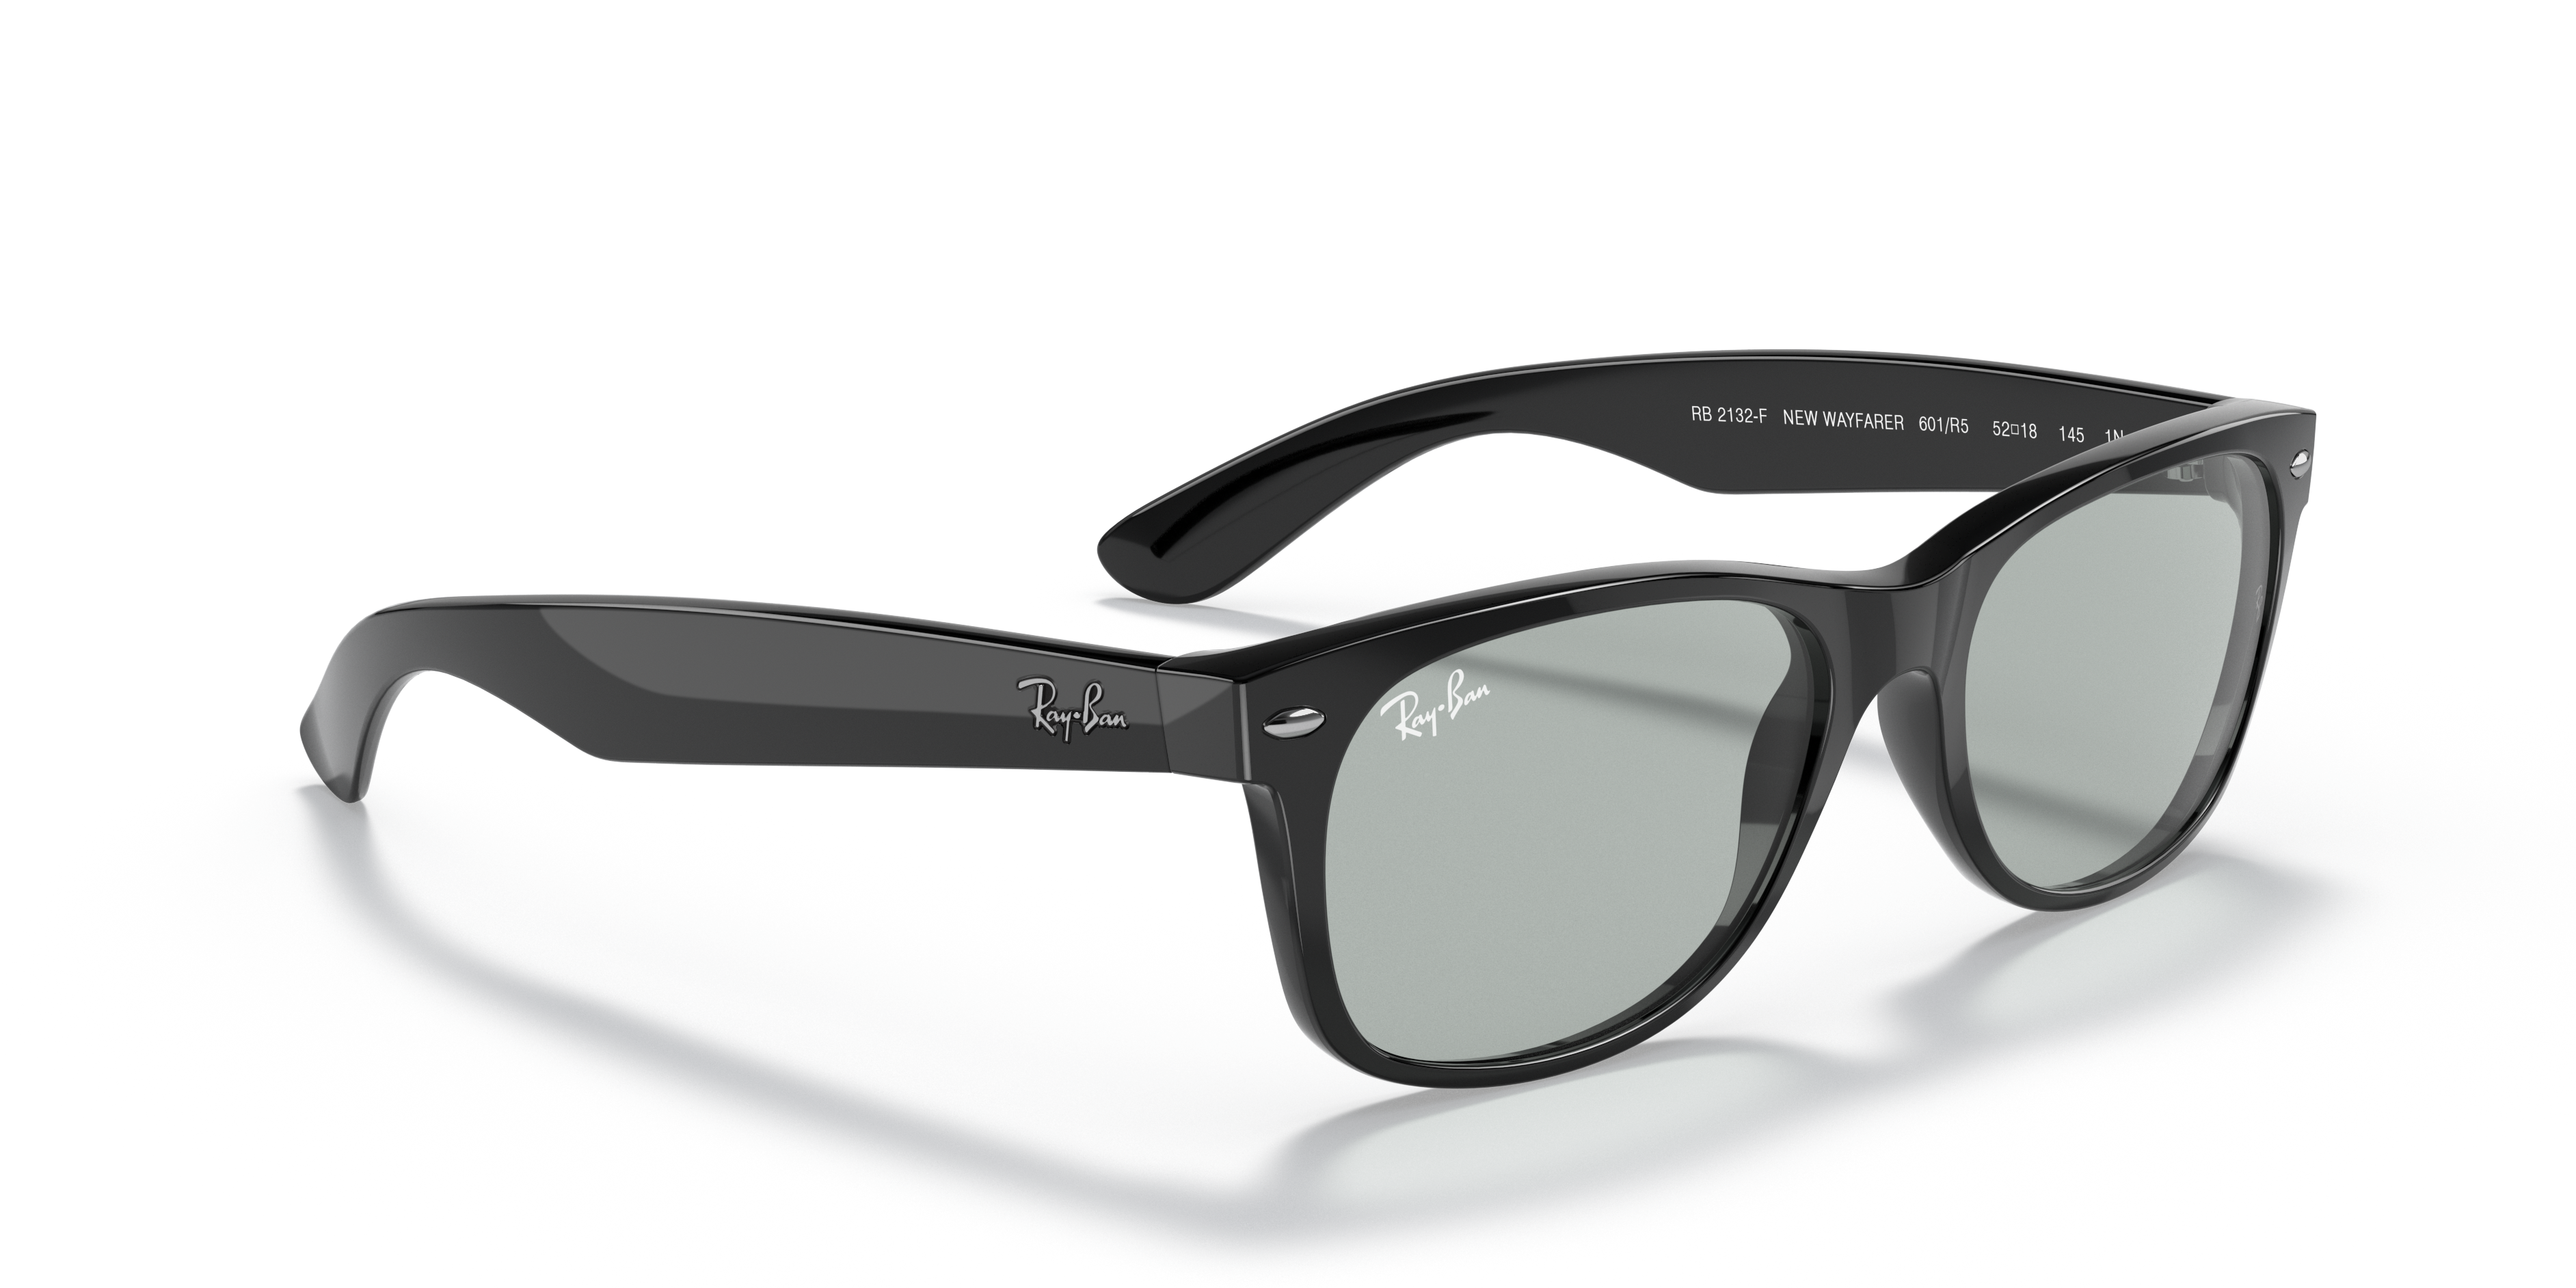 New Wayfarer Washed Lenses Sunglasses in Black and Light Grey 